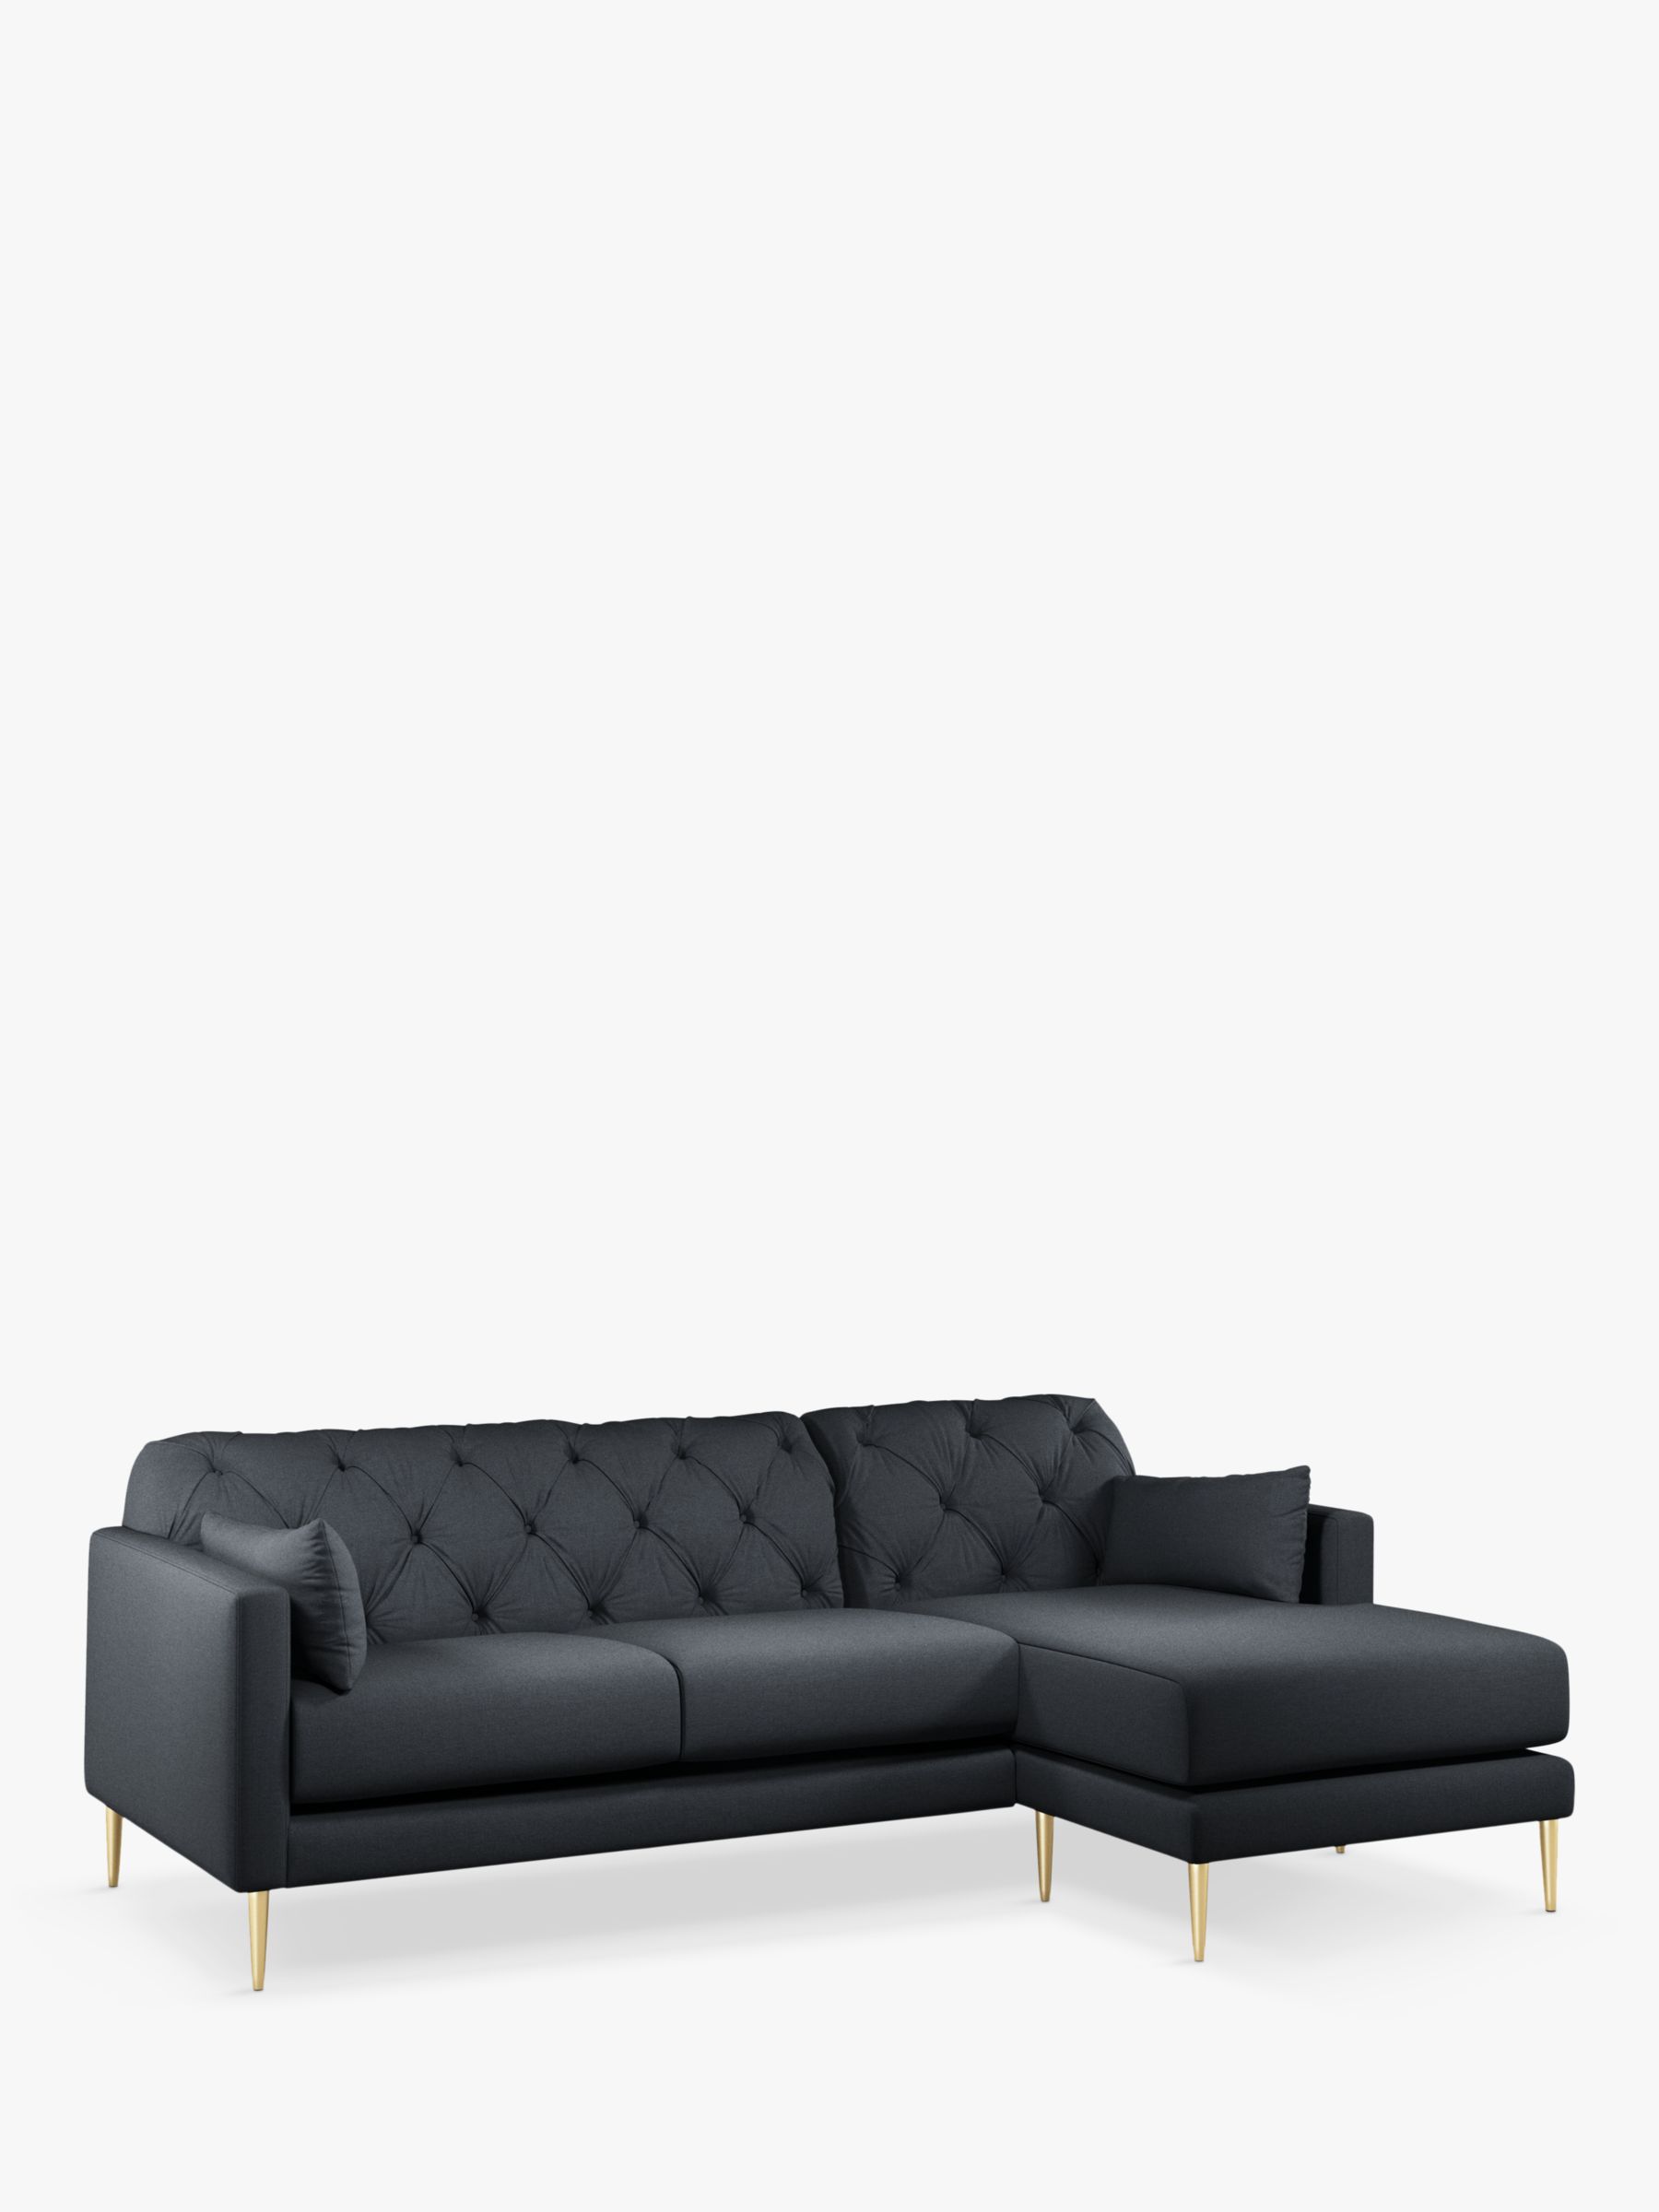 Mendel Range, Swoon Mendel Large 3 Seater RHF Chaise End Sofa, Gold Leg, Charcoal Cotton